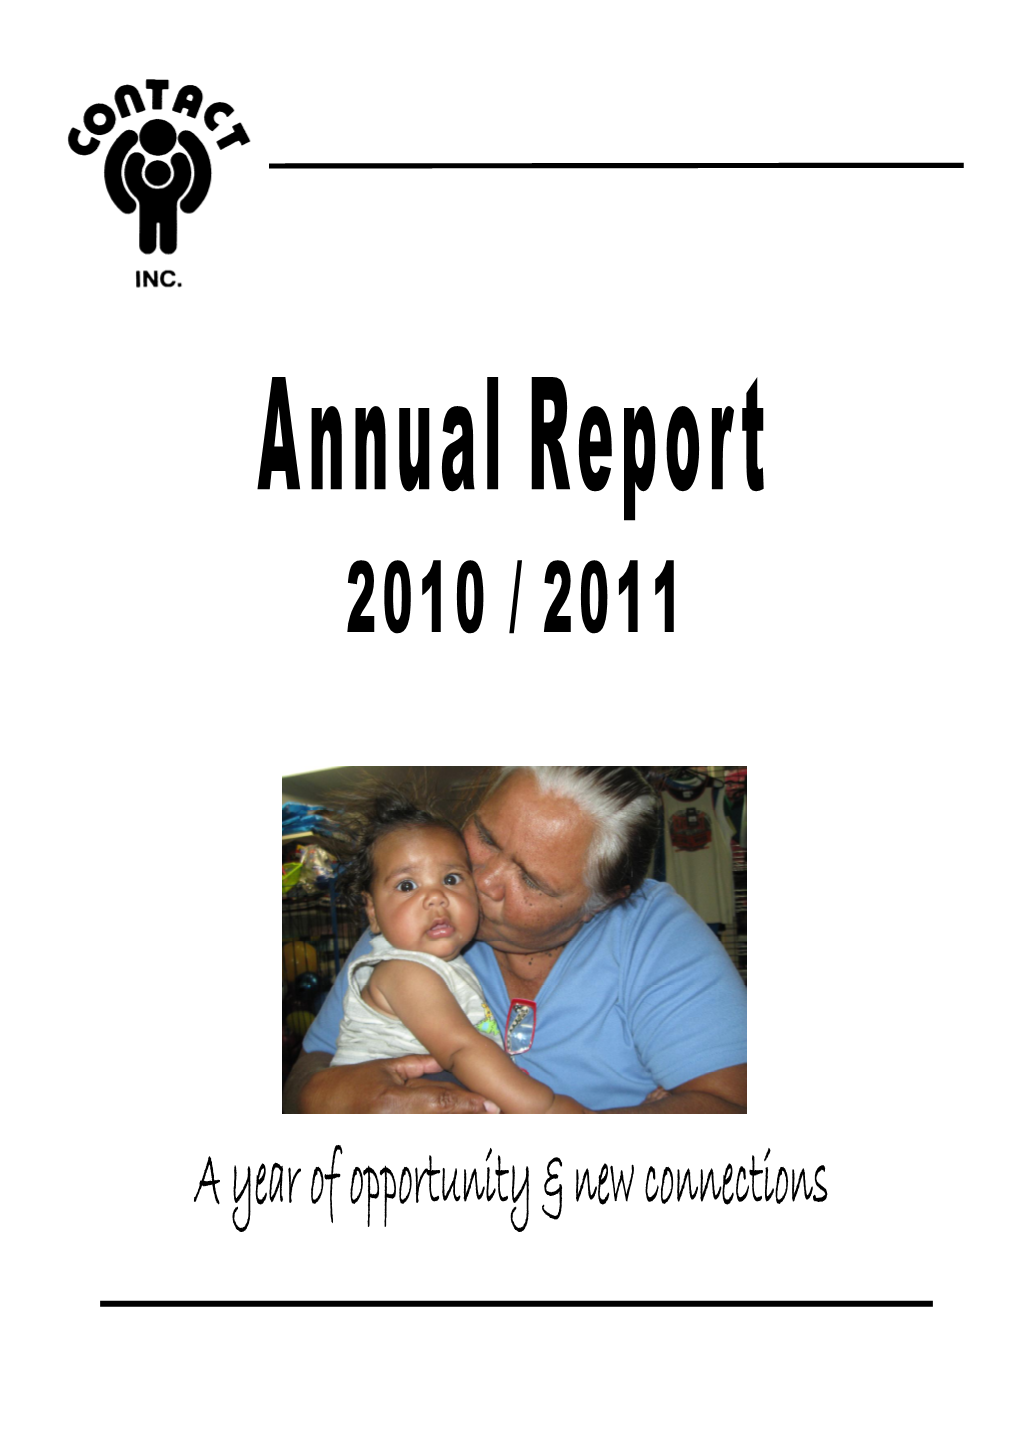 Contact-Inc-Annual-Report-20111.Pdf